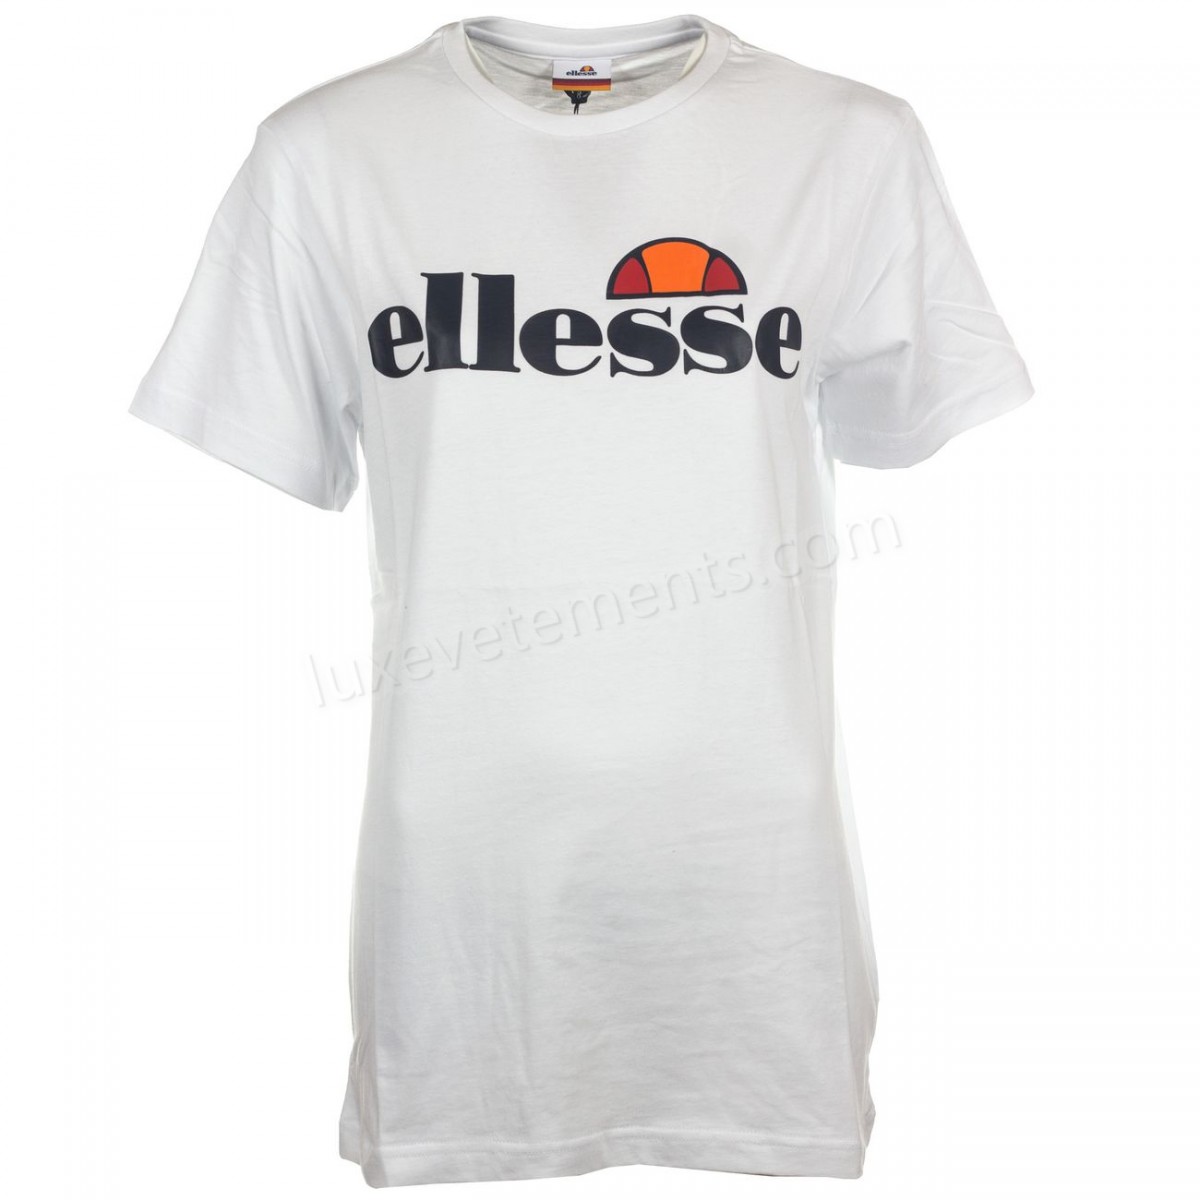 Ellesse-Athlétisme femme ELLESSE Ellesse Heritage Albany Womens Ladies Boyfriend Fashion T-Shirt Tee White - UK 12 Vente en ligne - -0